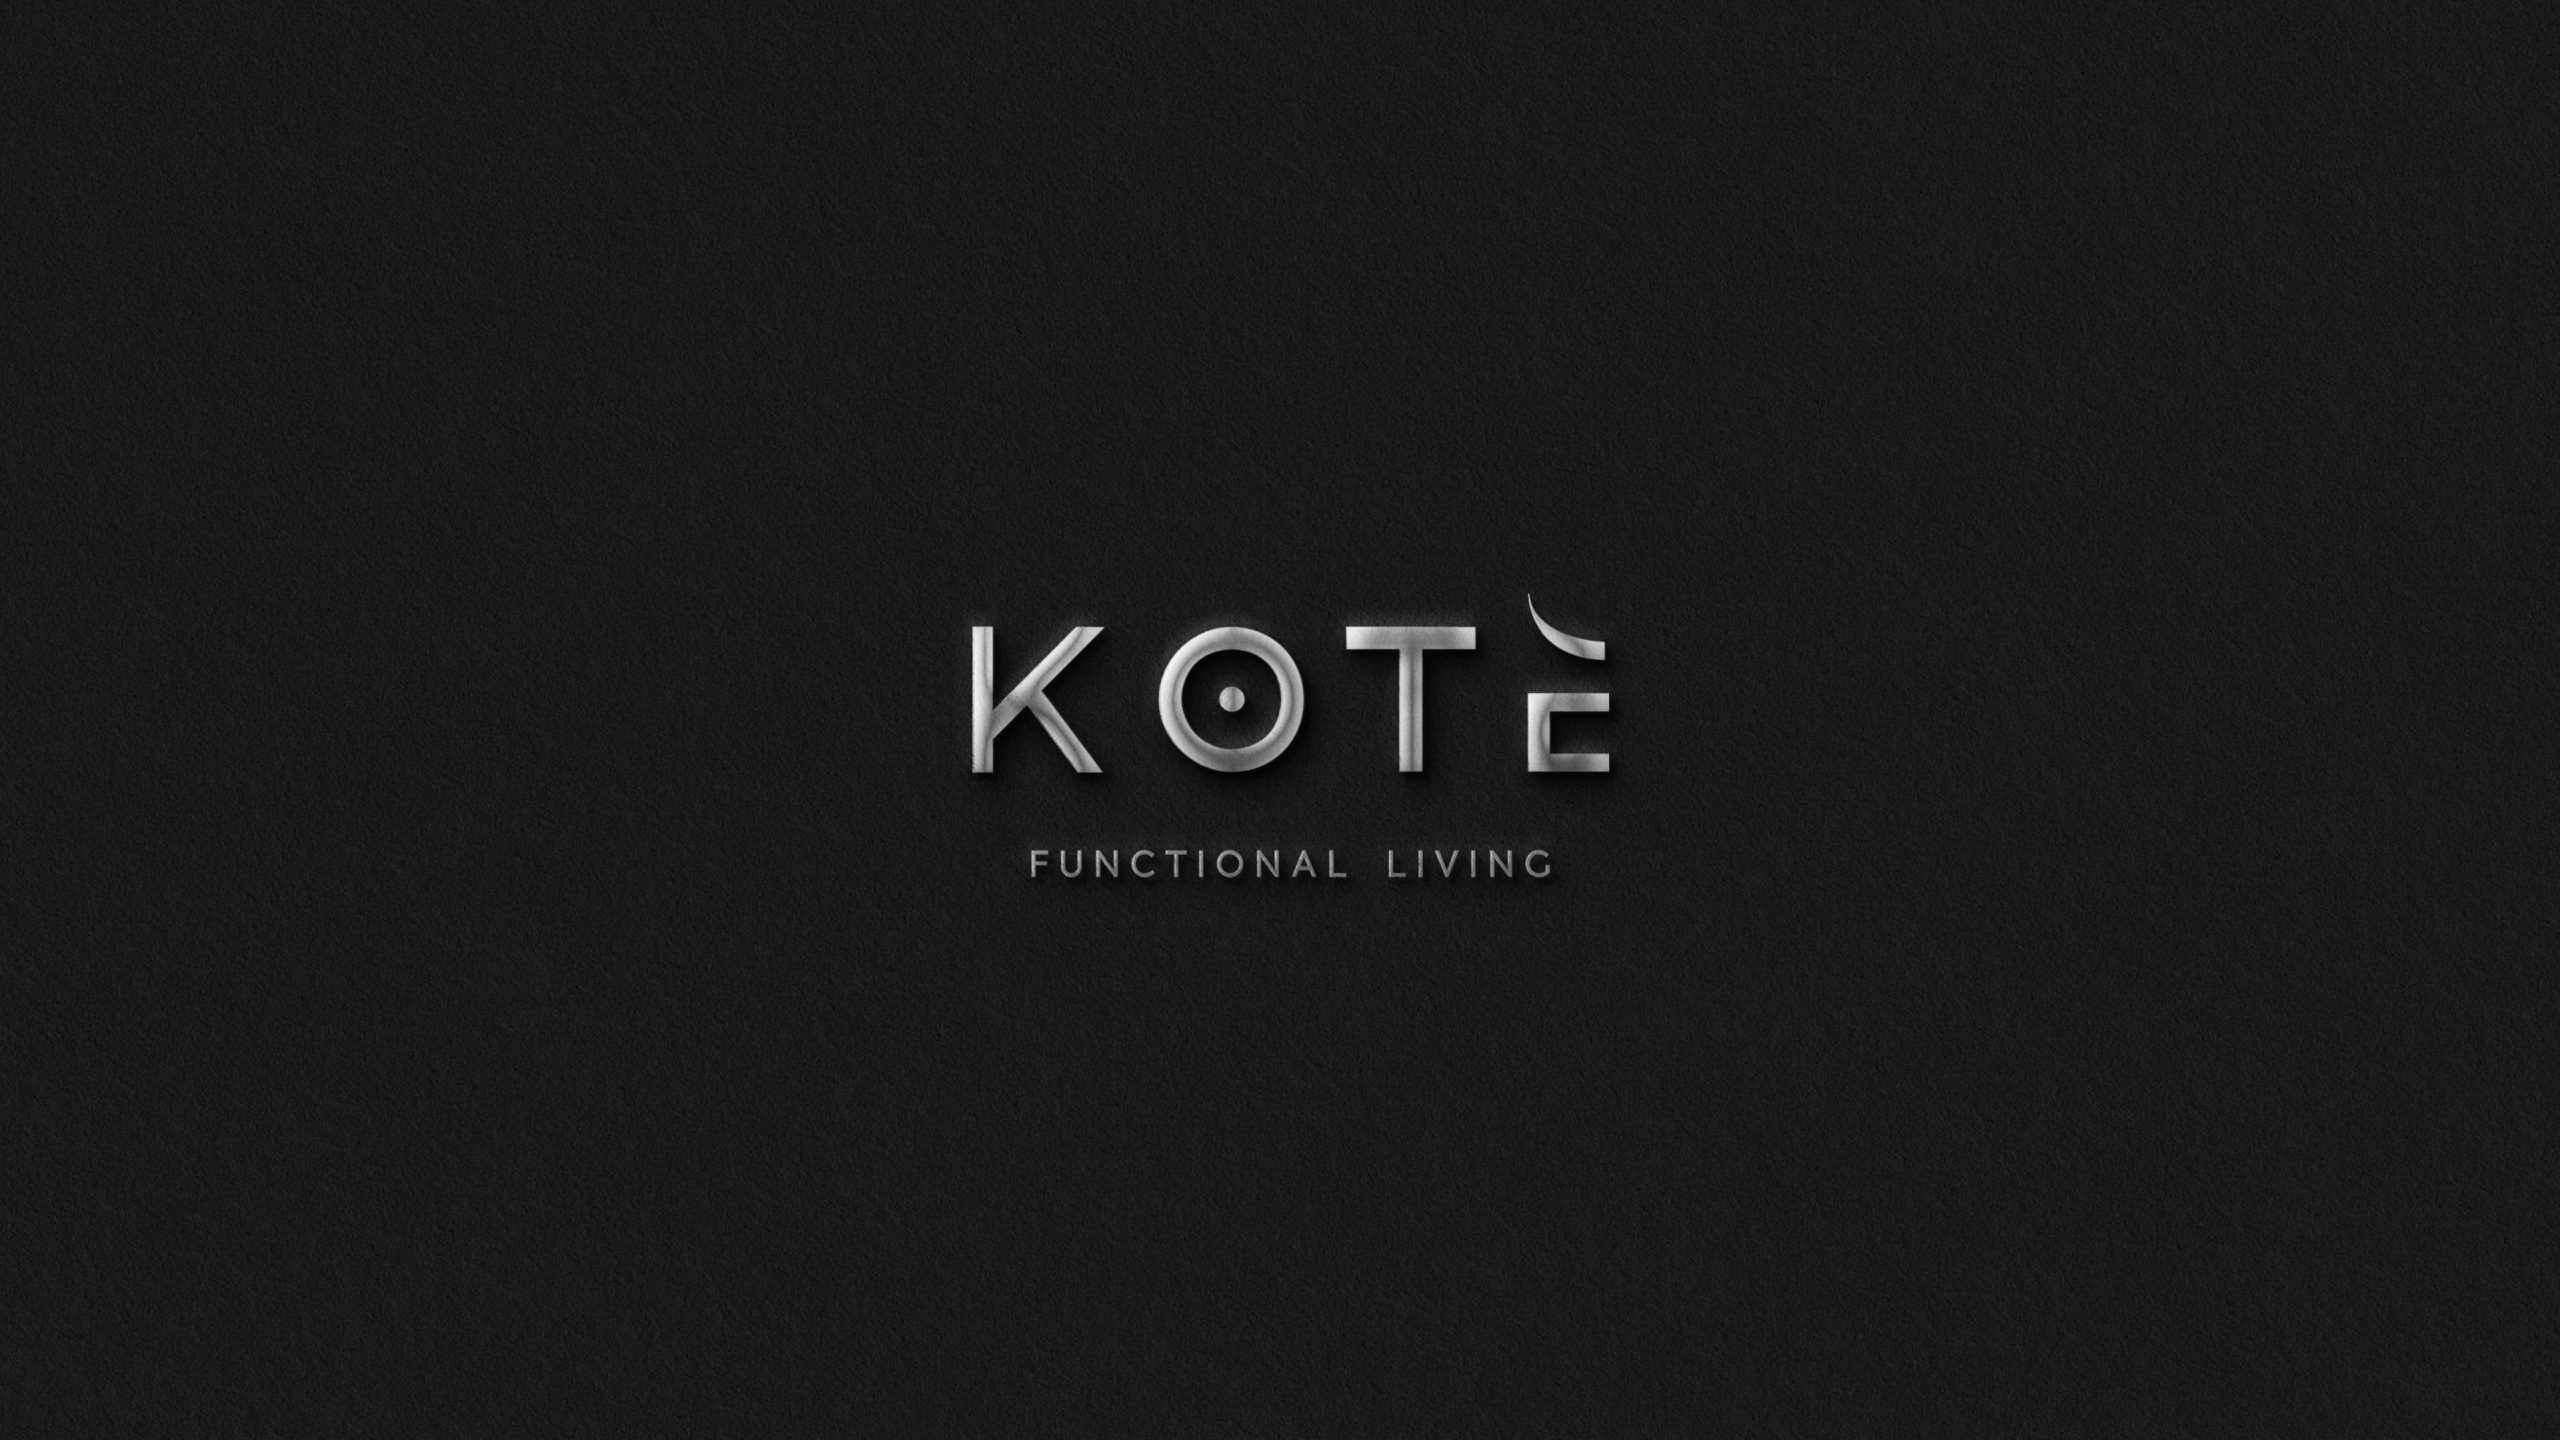 Kote - Functional Living